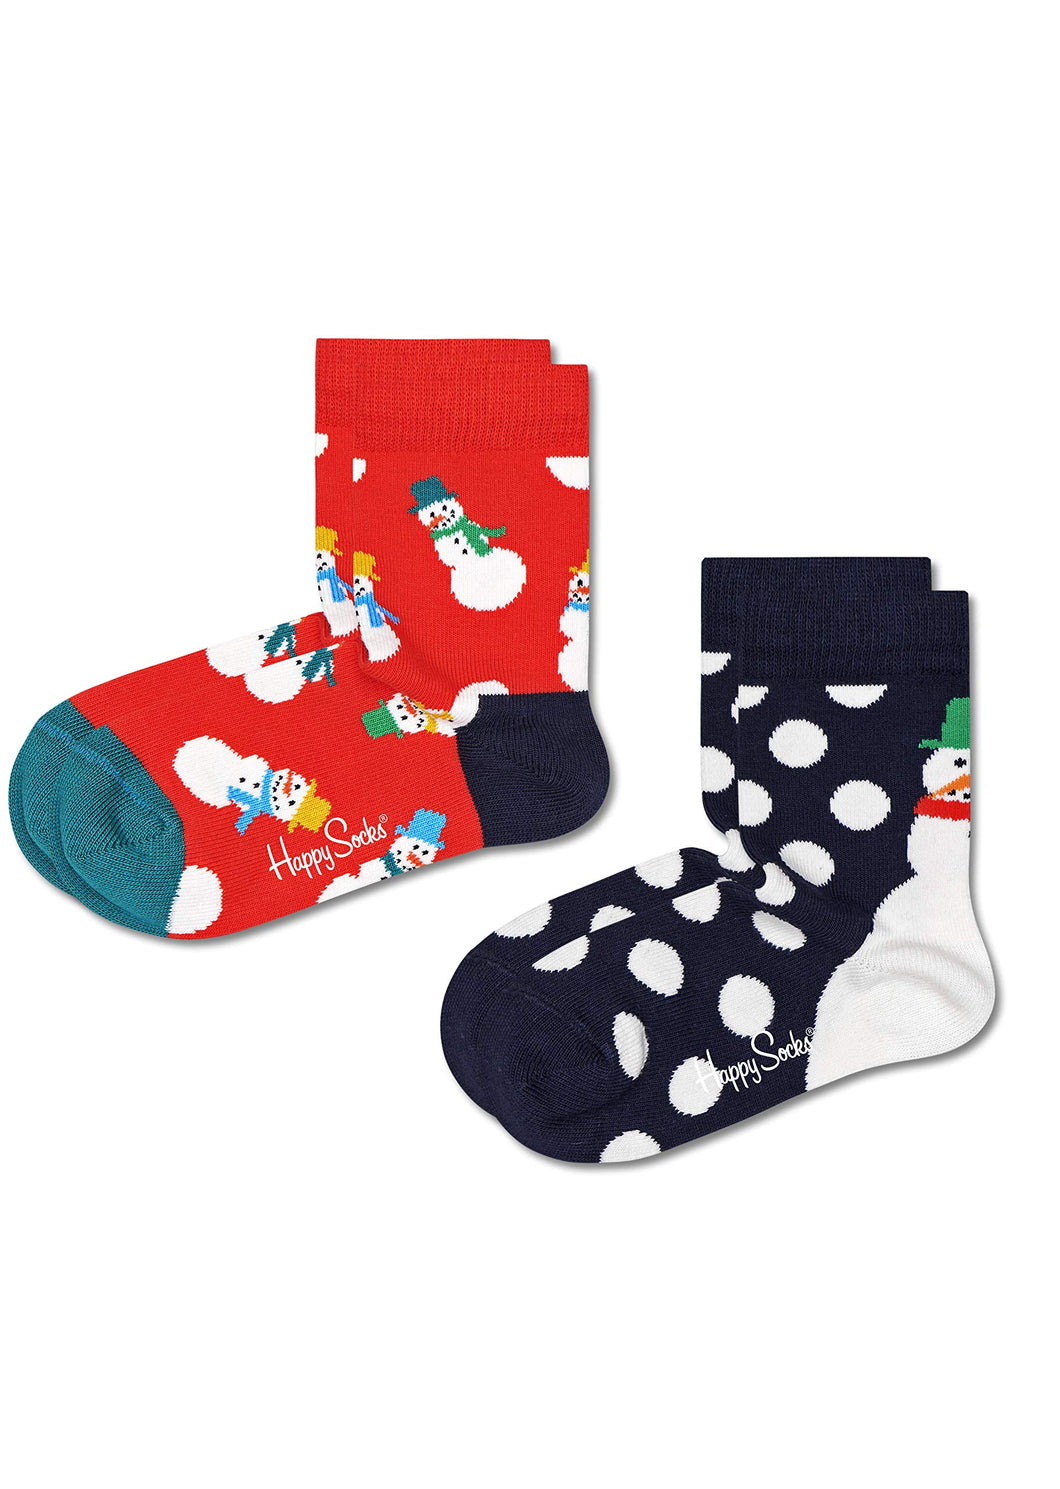 Happy Socks Calzini Unisex-Bambini e Ragazzi